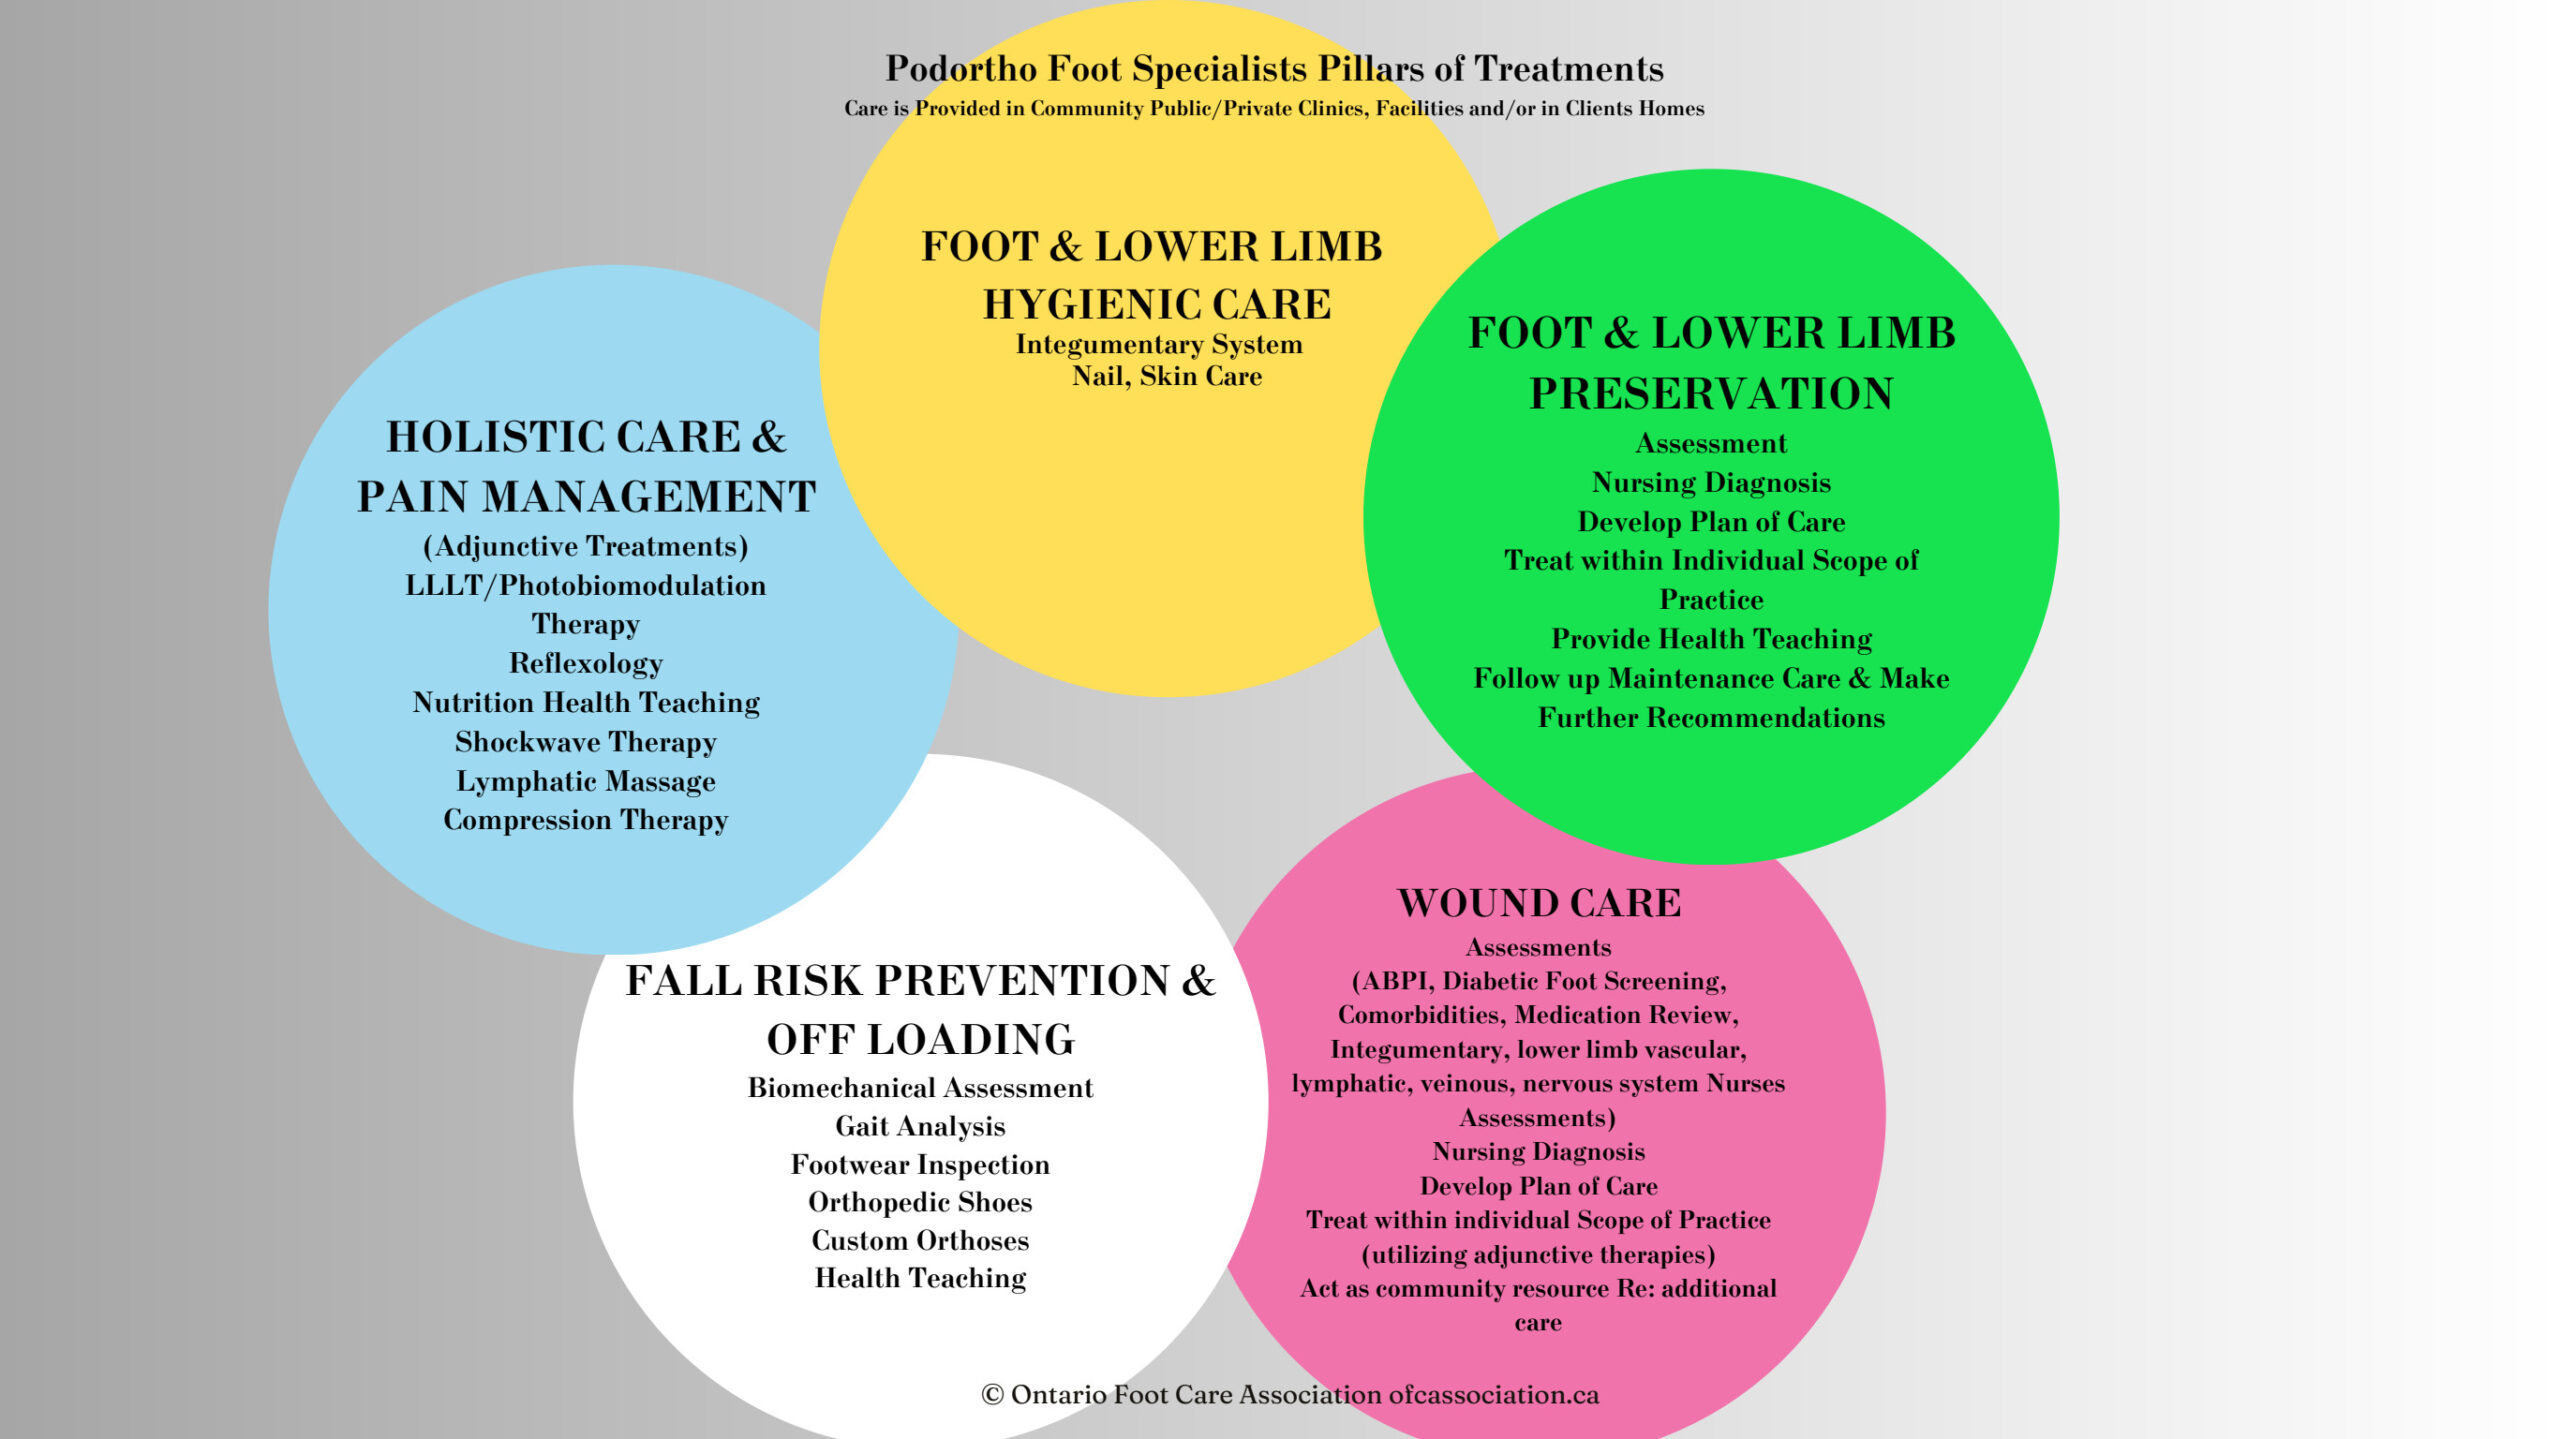 Podortho Foot Specialists Pillars of Treatments